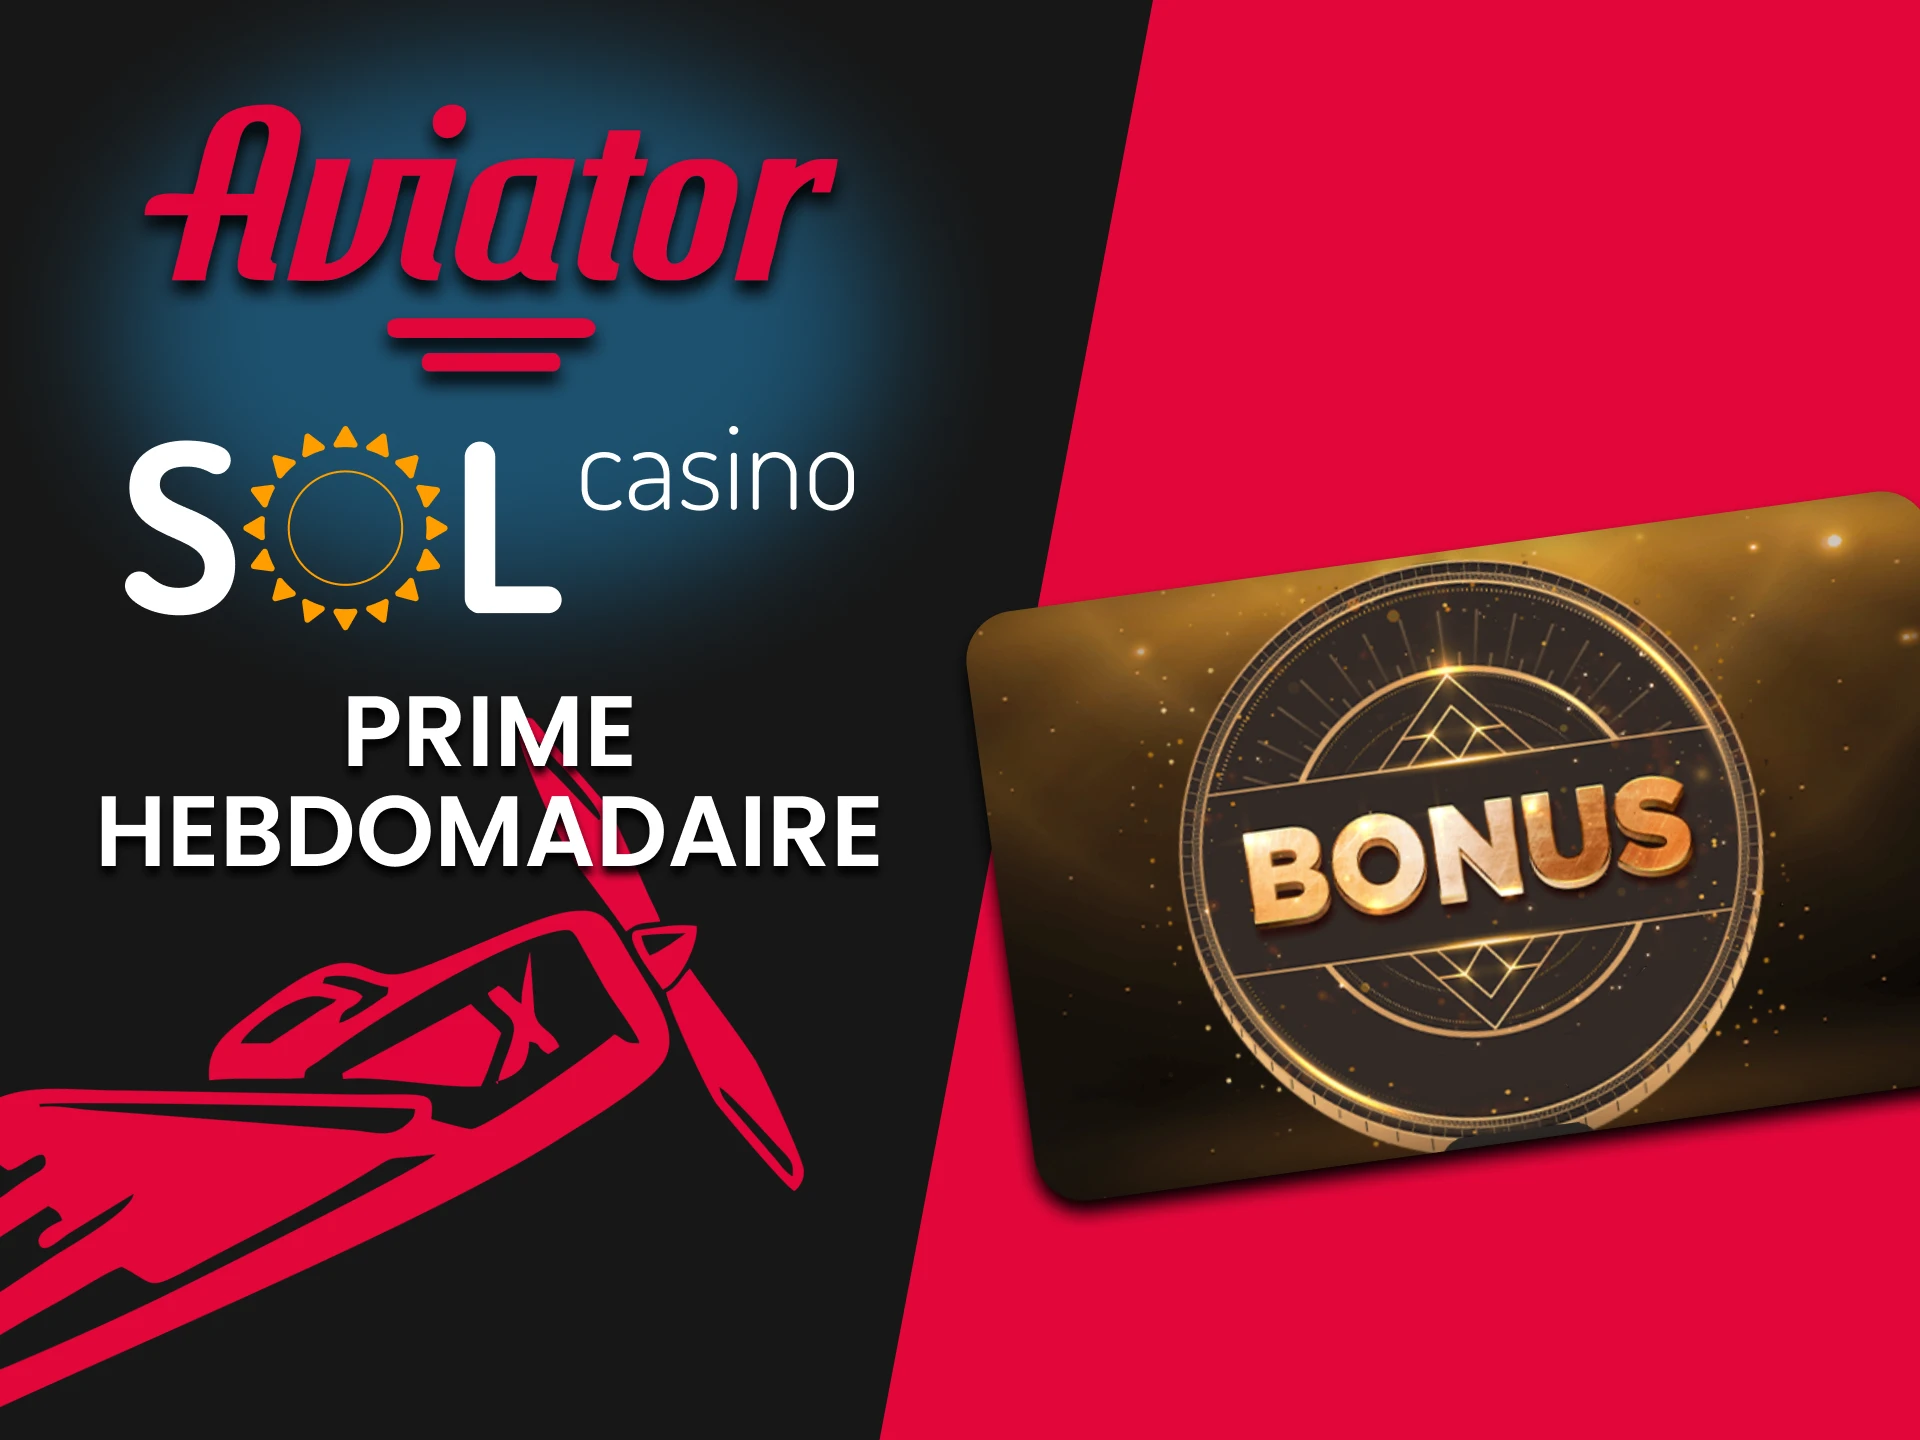 Sol Casino offre un bonus hebdomadaire pour le jeu Aviator.